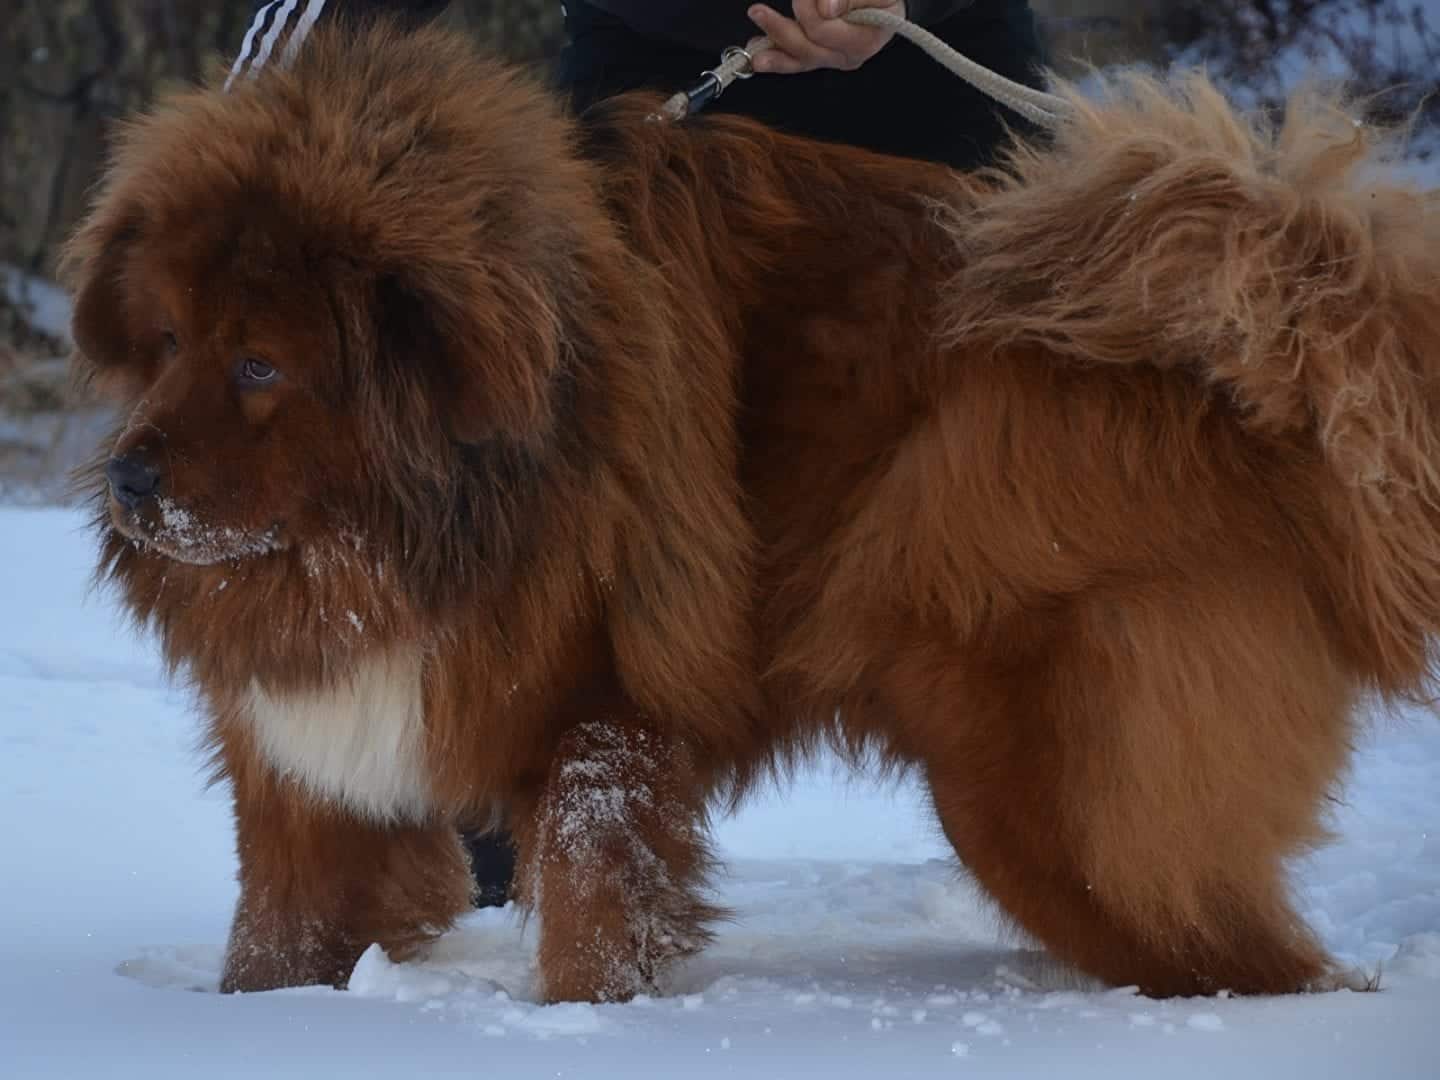 Mastim tibetano - Conheça o cachorro da alta classe